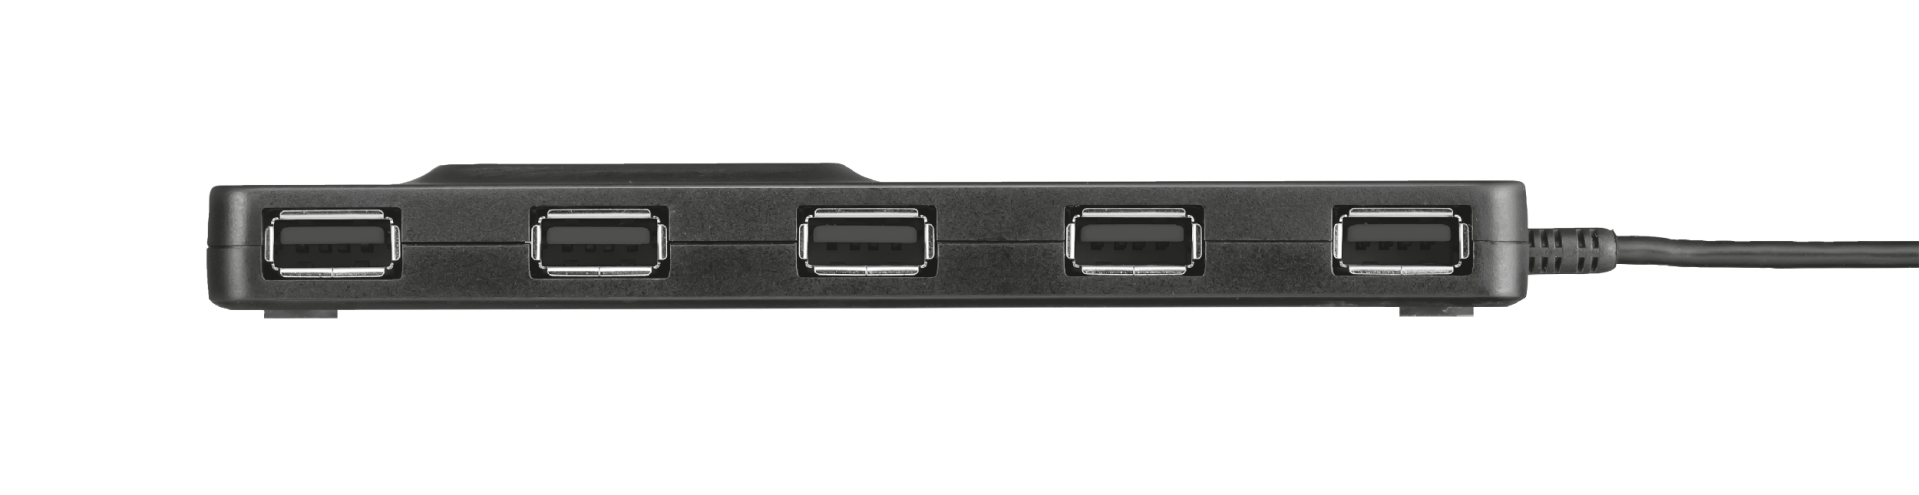 Oila 7 Port USB 2.0 Hub-Side